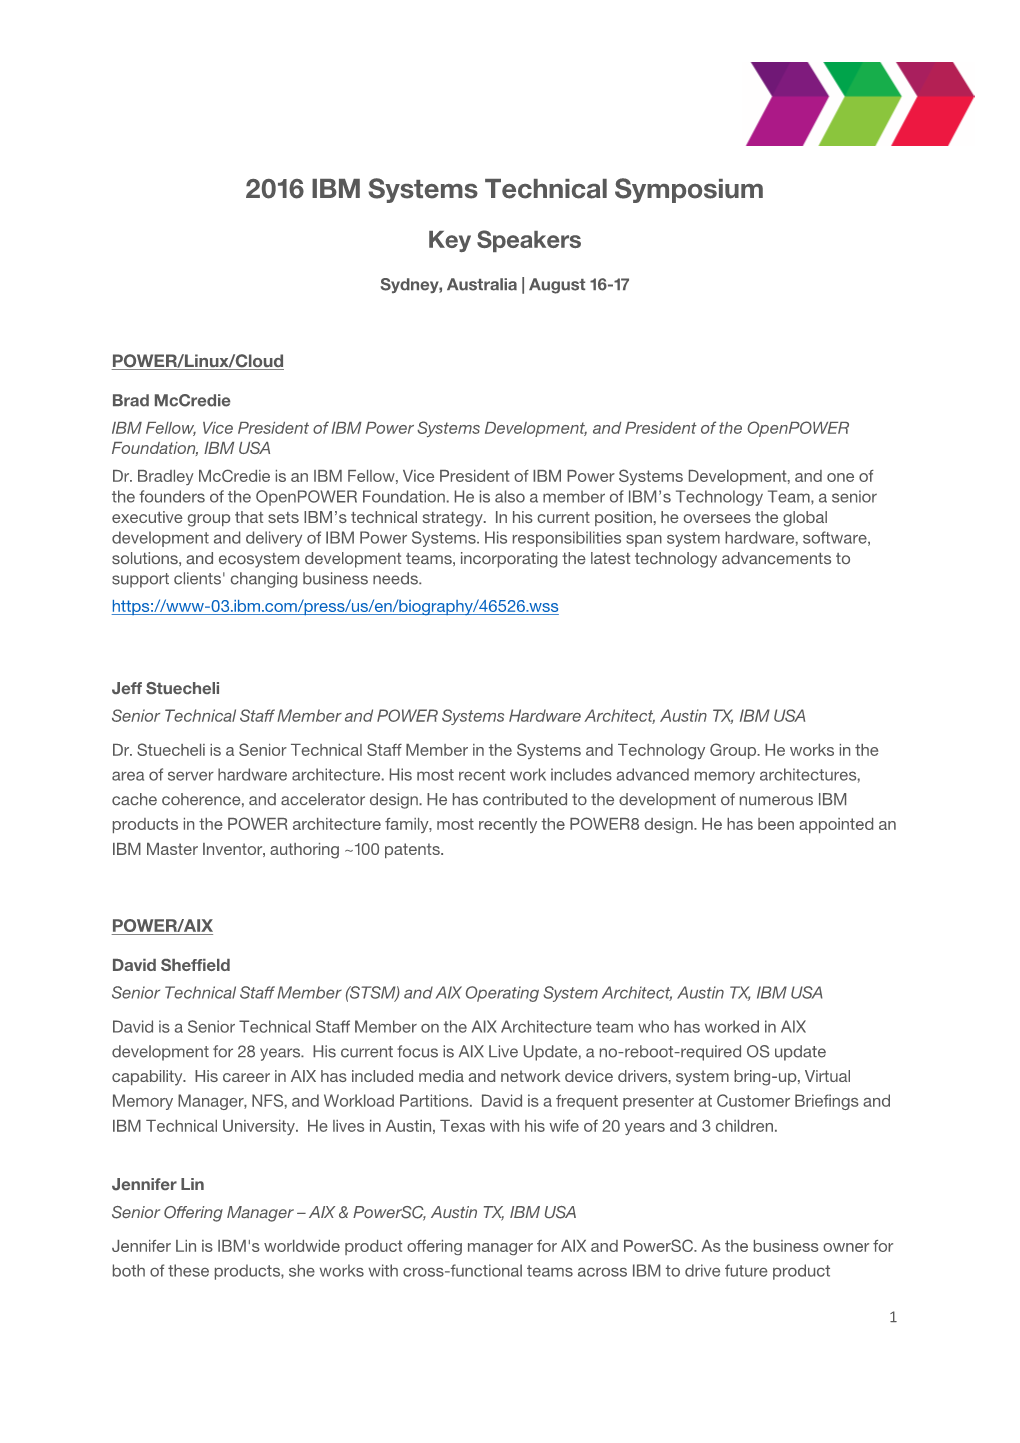 2016 IBM Systems Technical Symposium Key Speakers